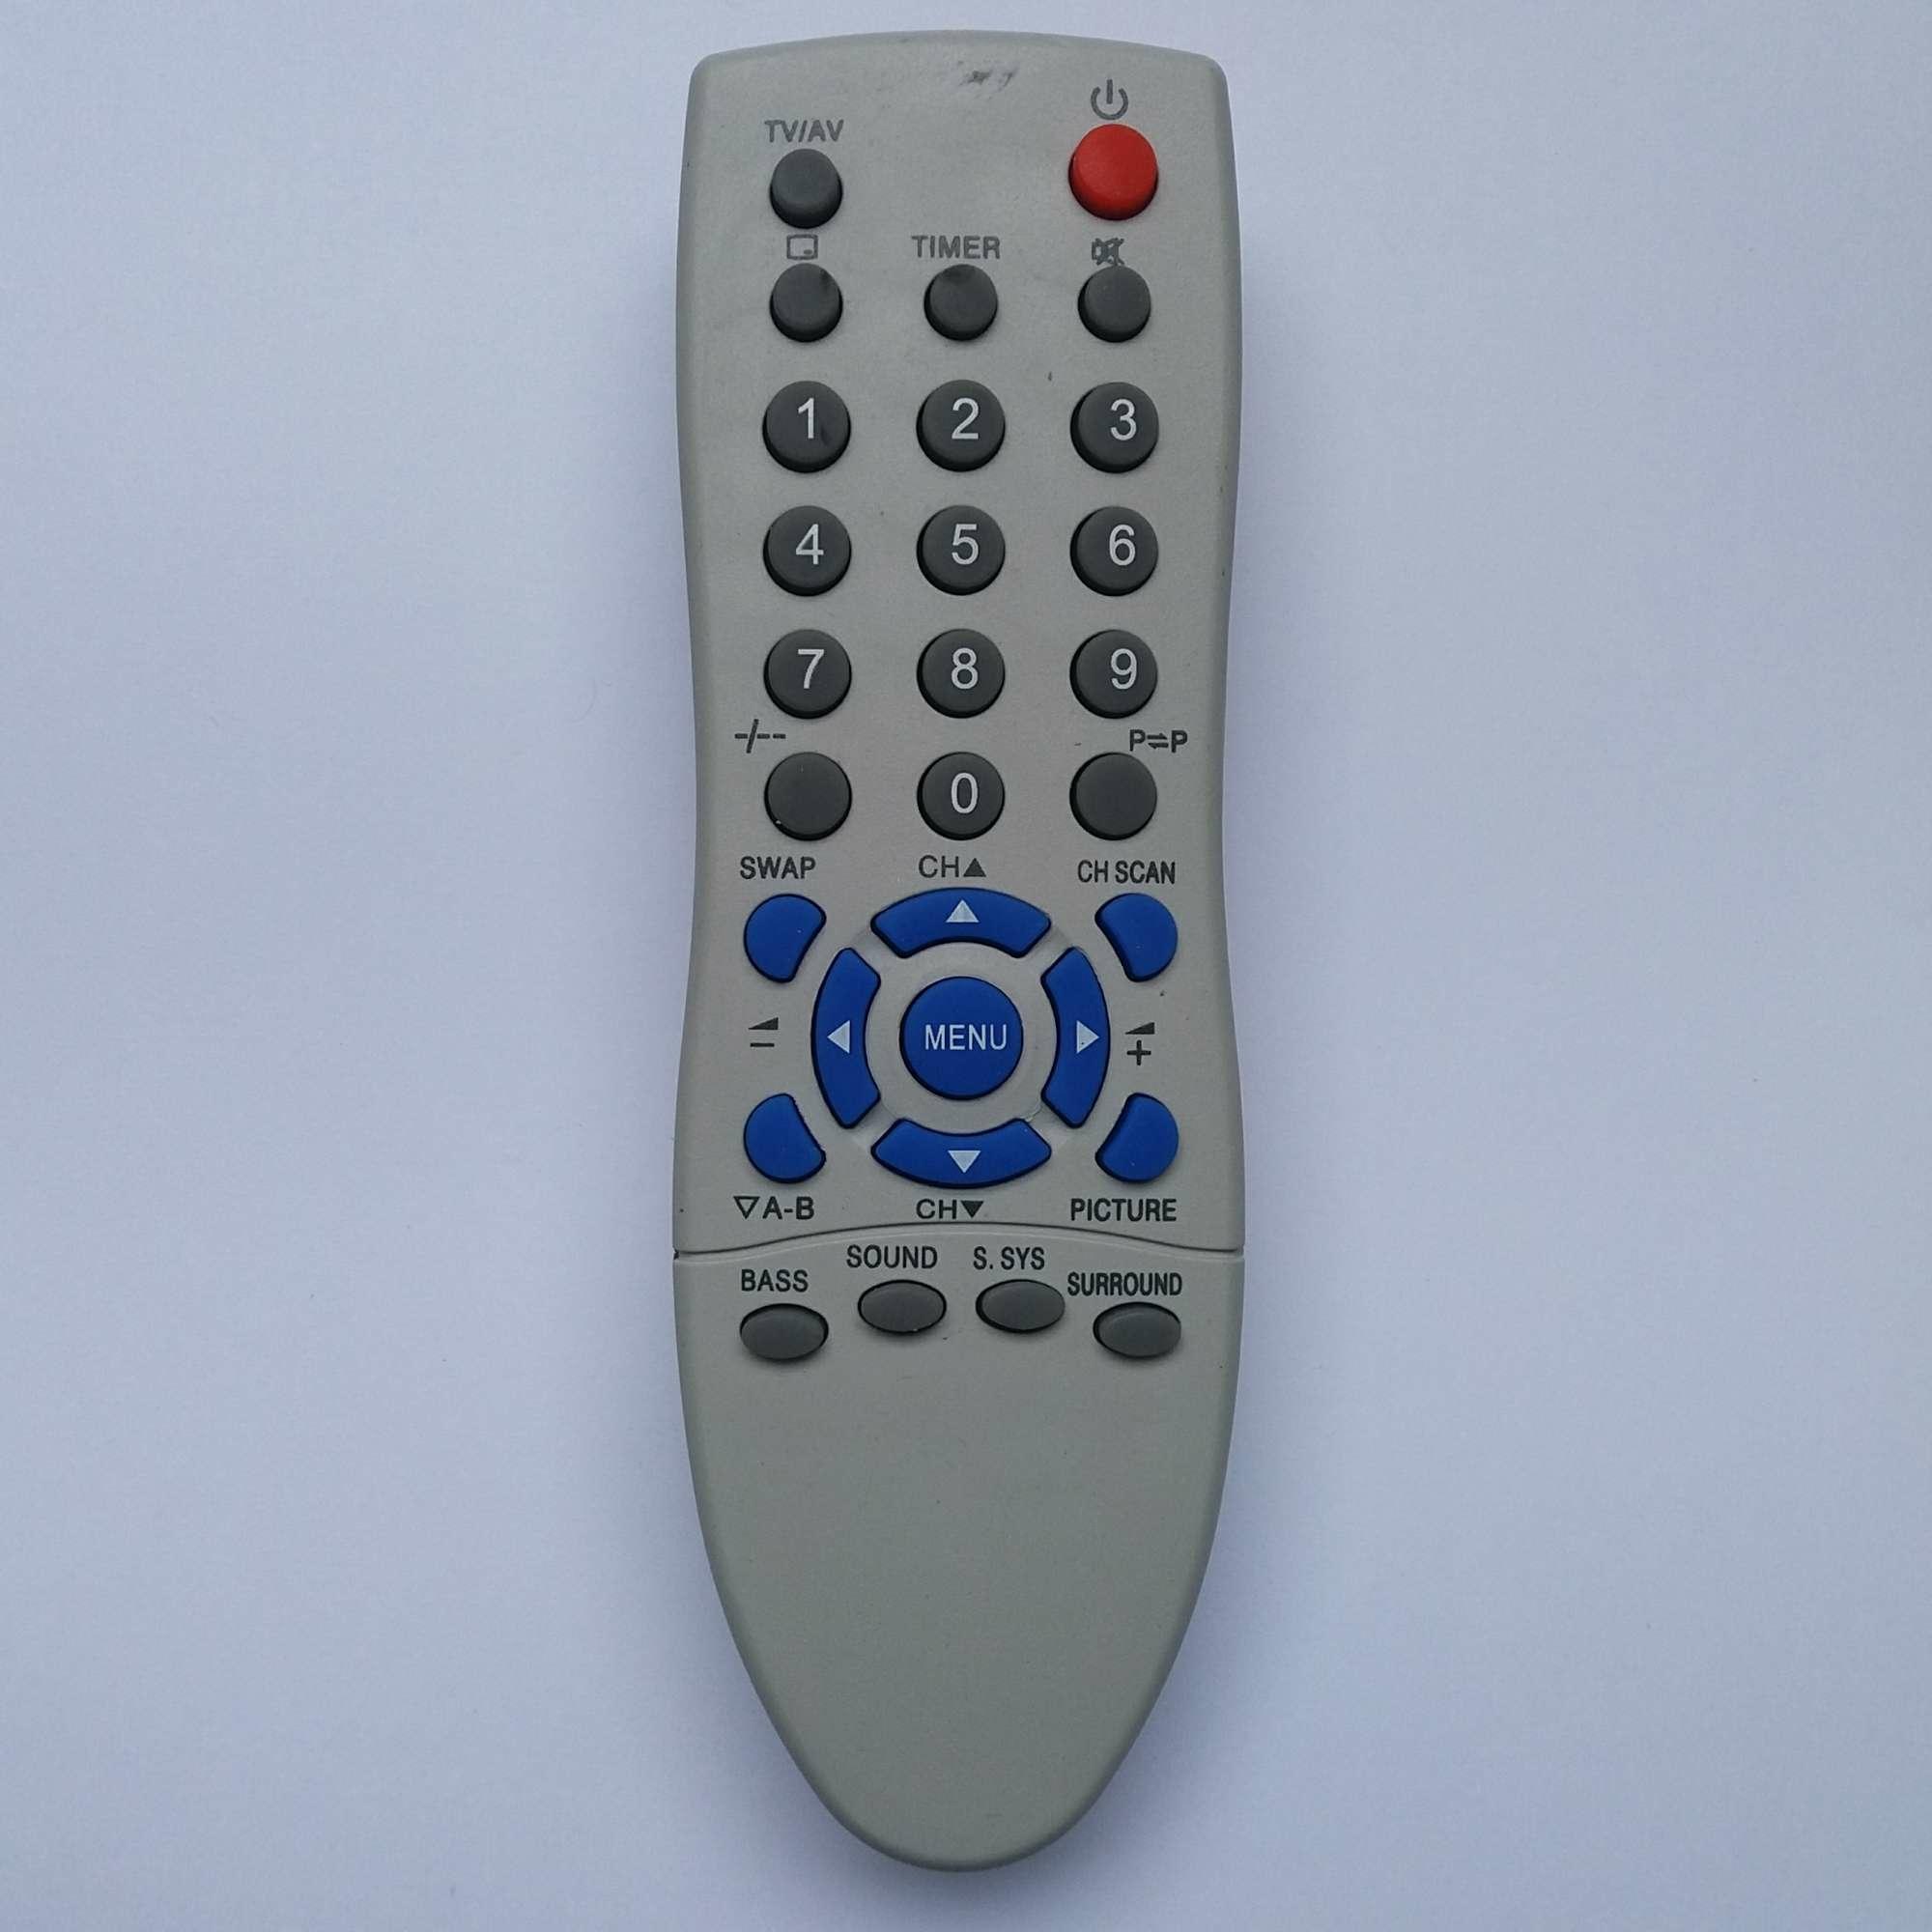 remote tv sanyo tabung - remot control tv